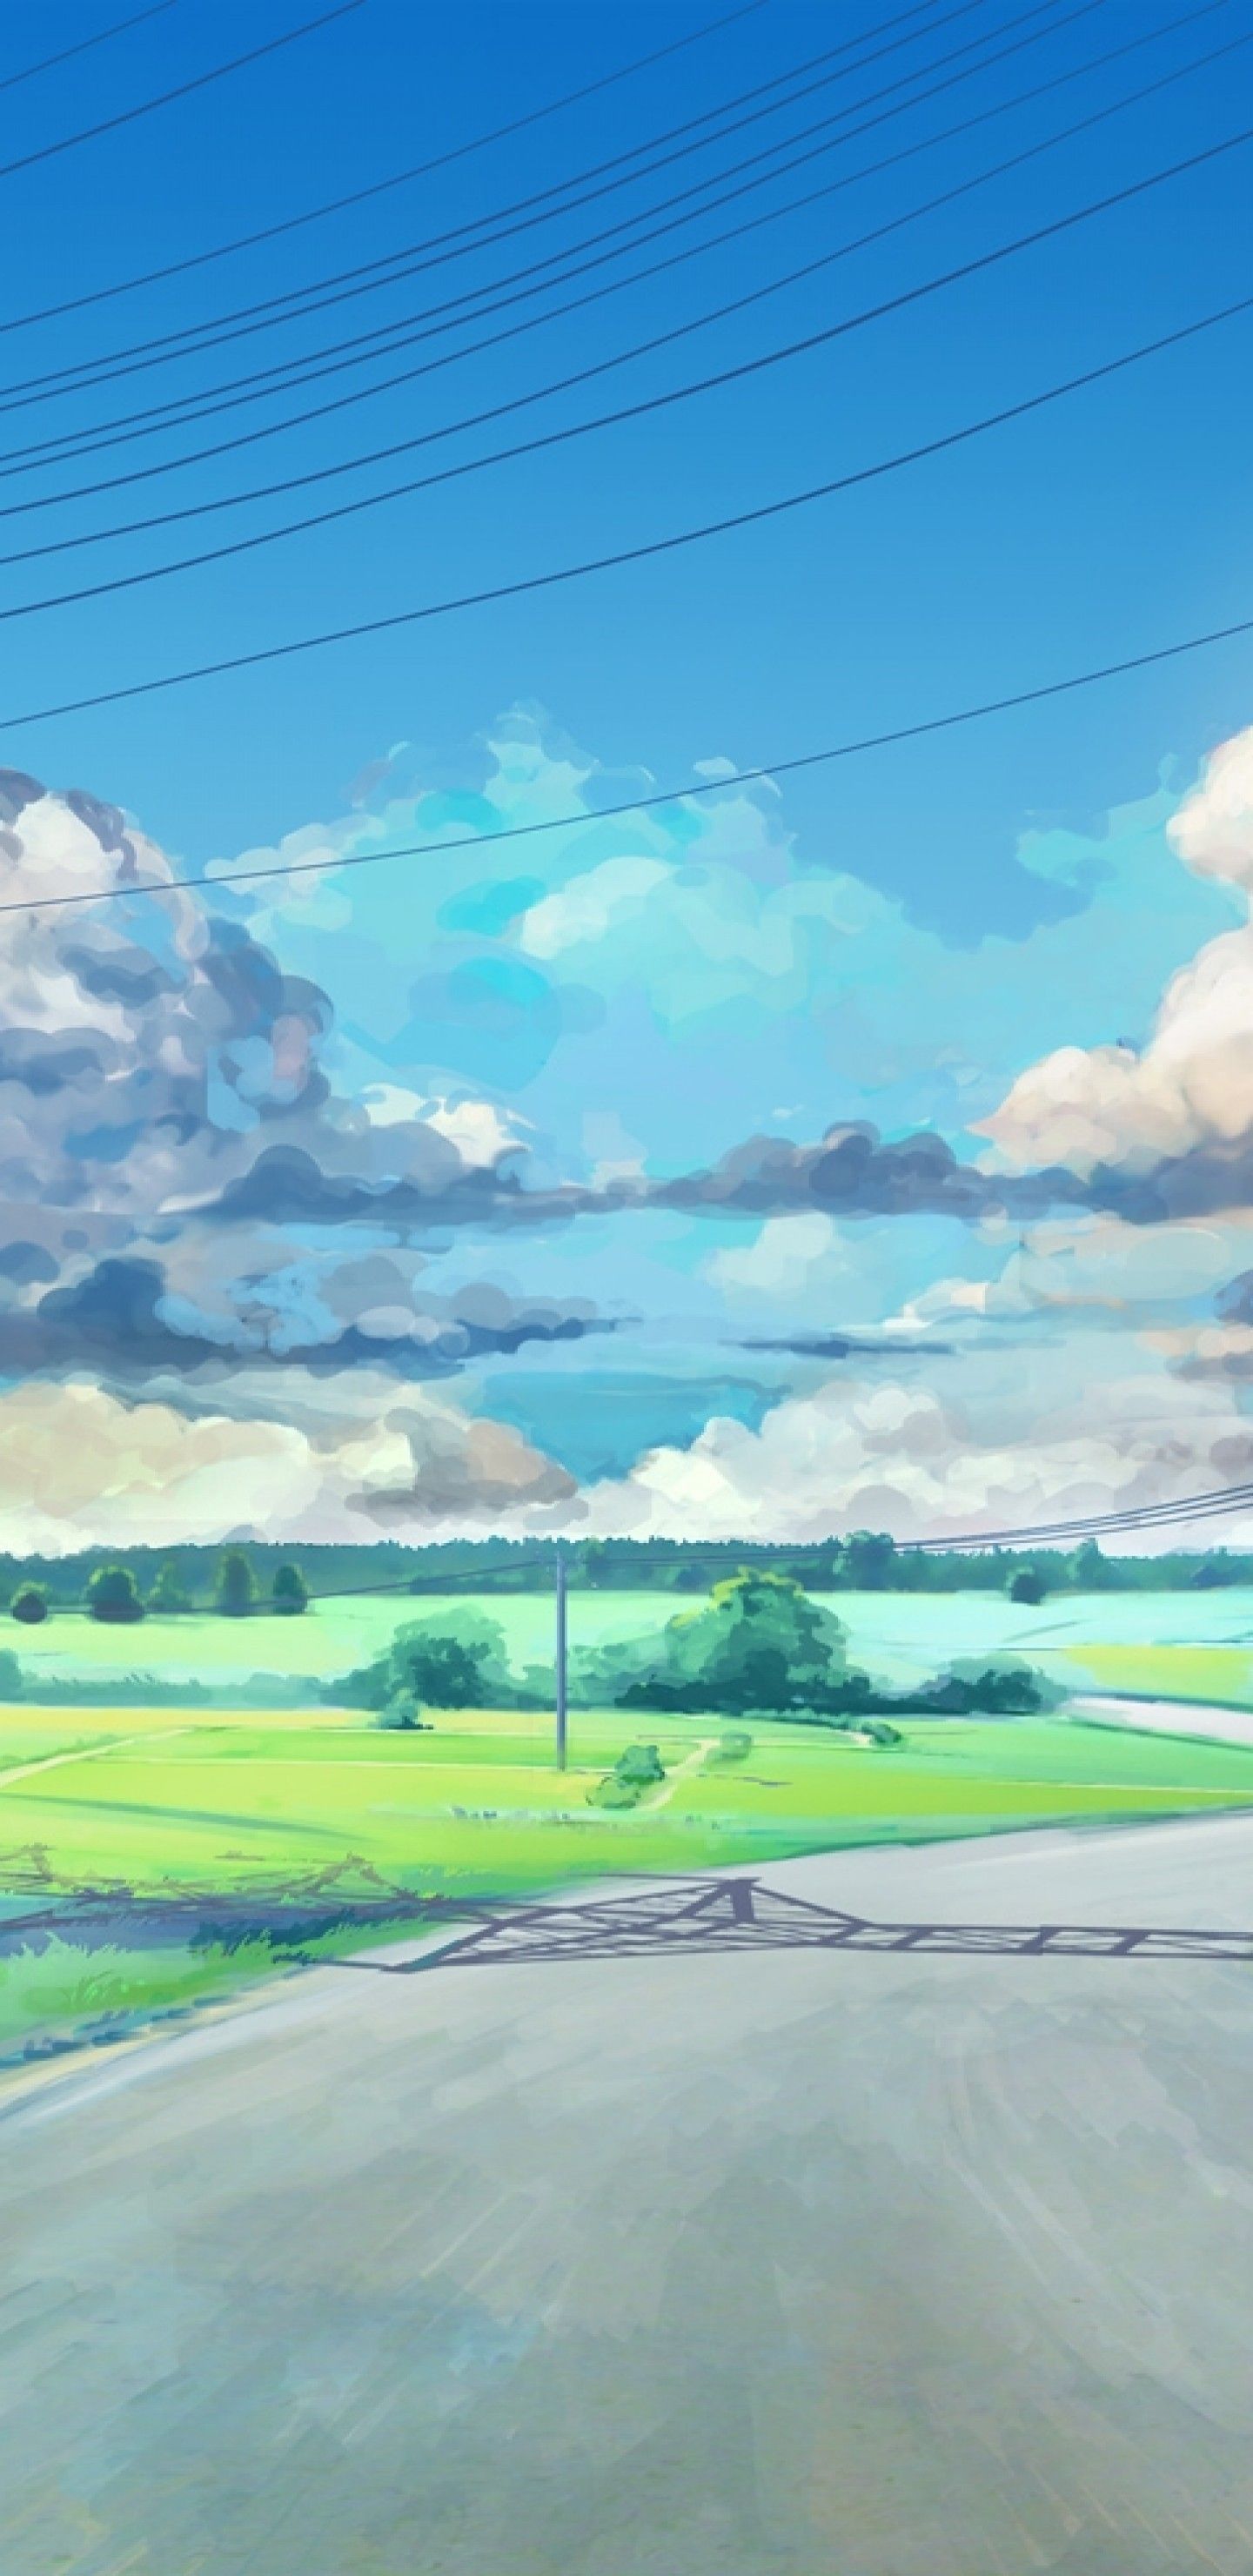 Download 1440x2960 Anime Landscape, Clouds, Grass, Field, Scenic